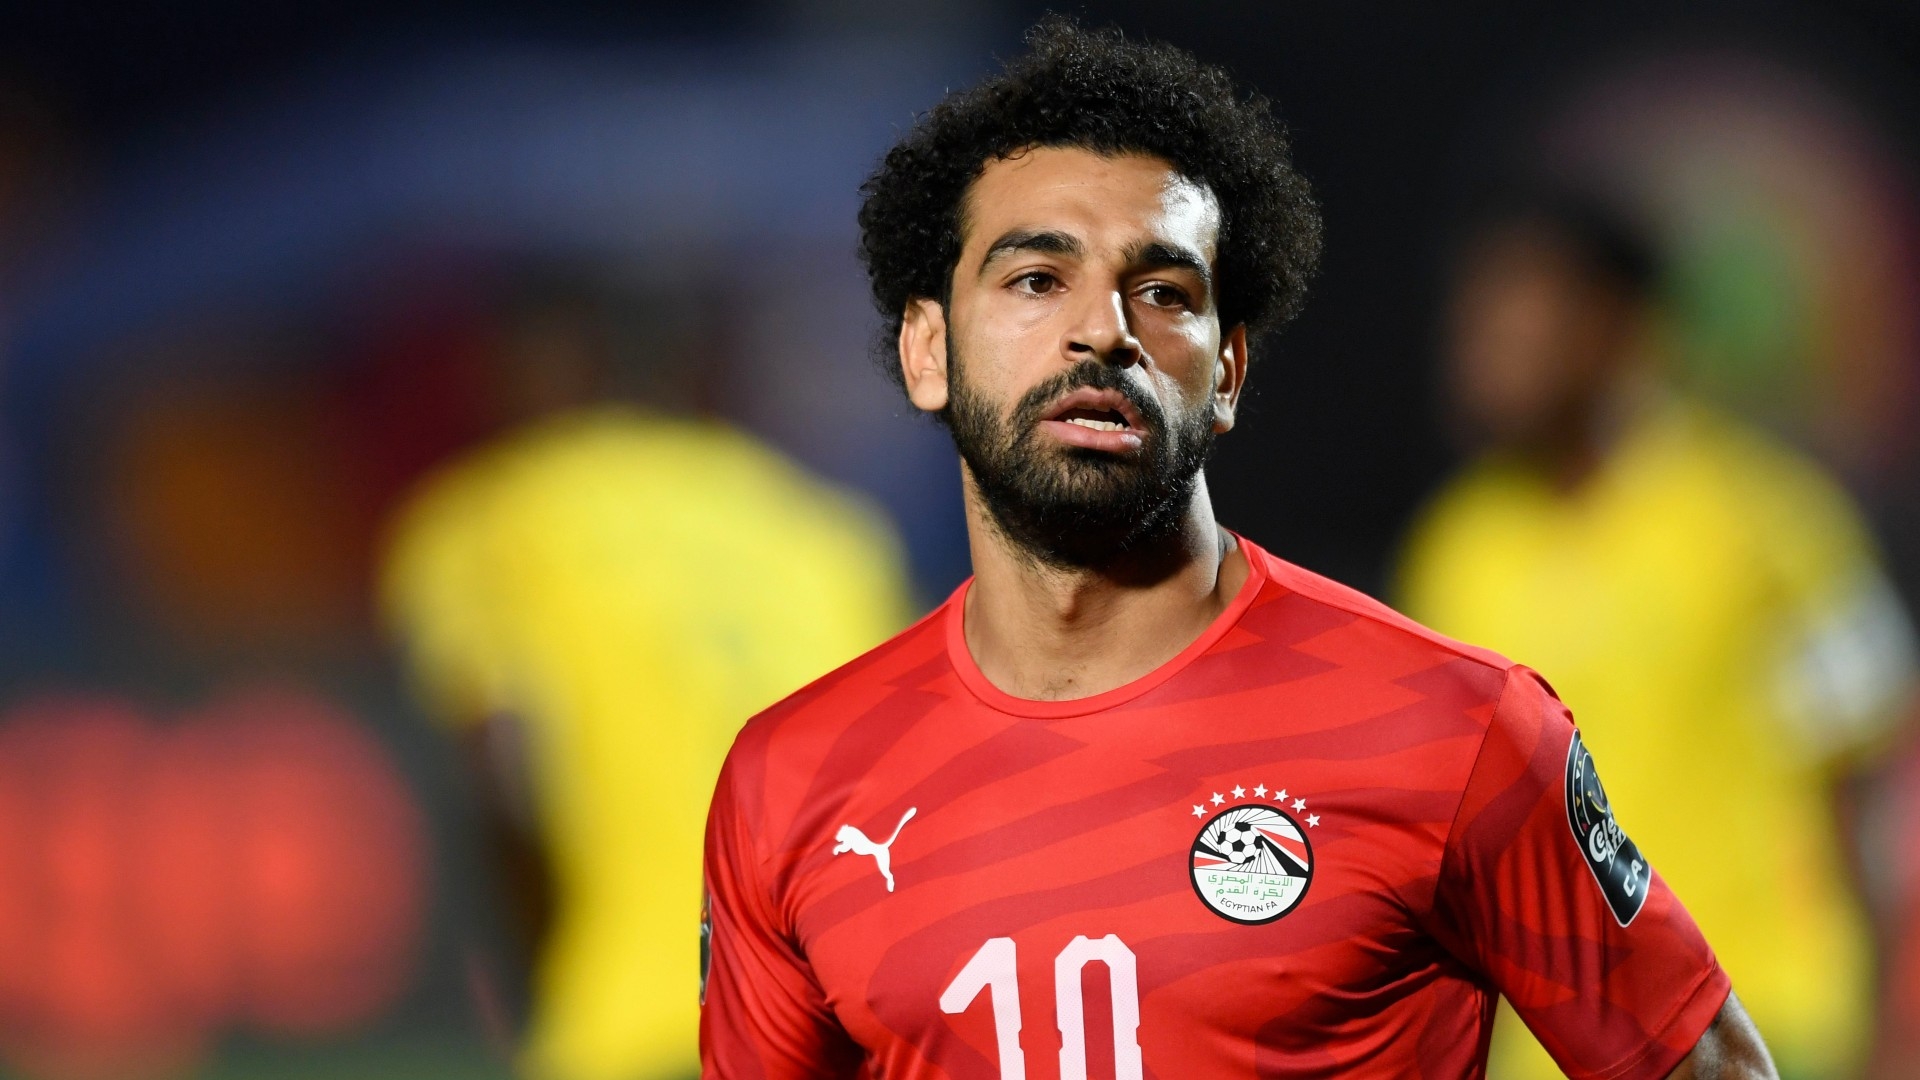 Afcon 2021: Liverpool's Salah headlines Egypt's provisional squad | Goal.com